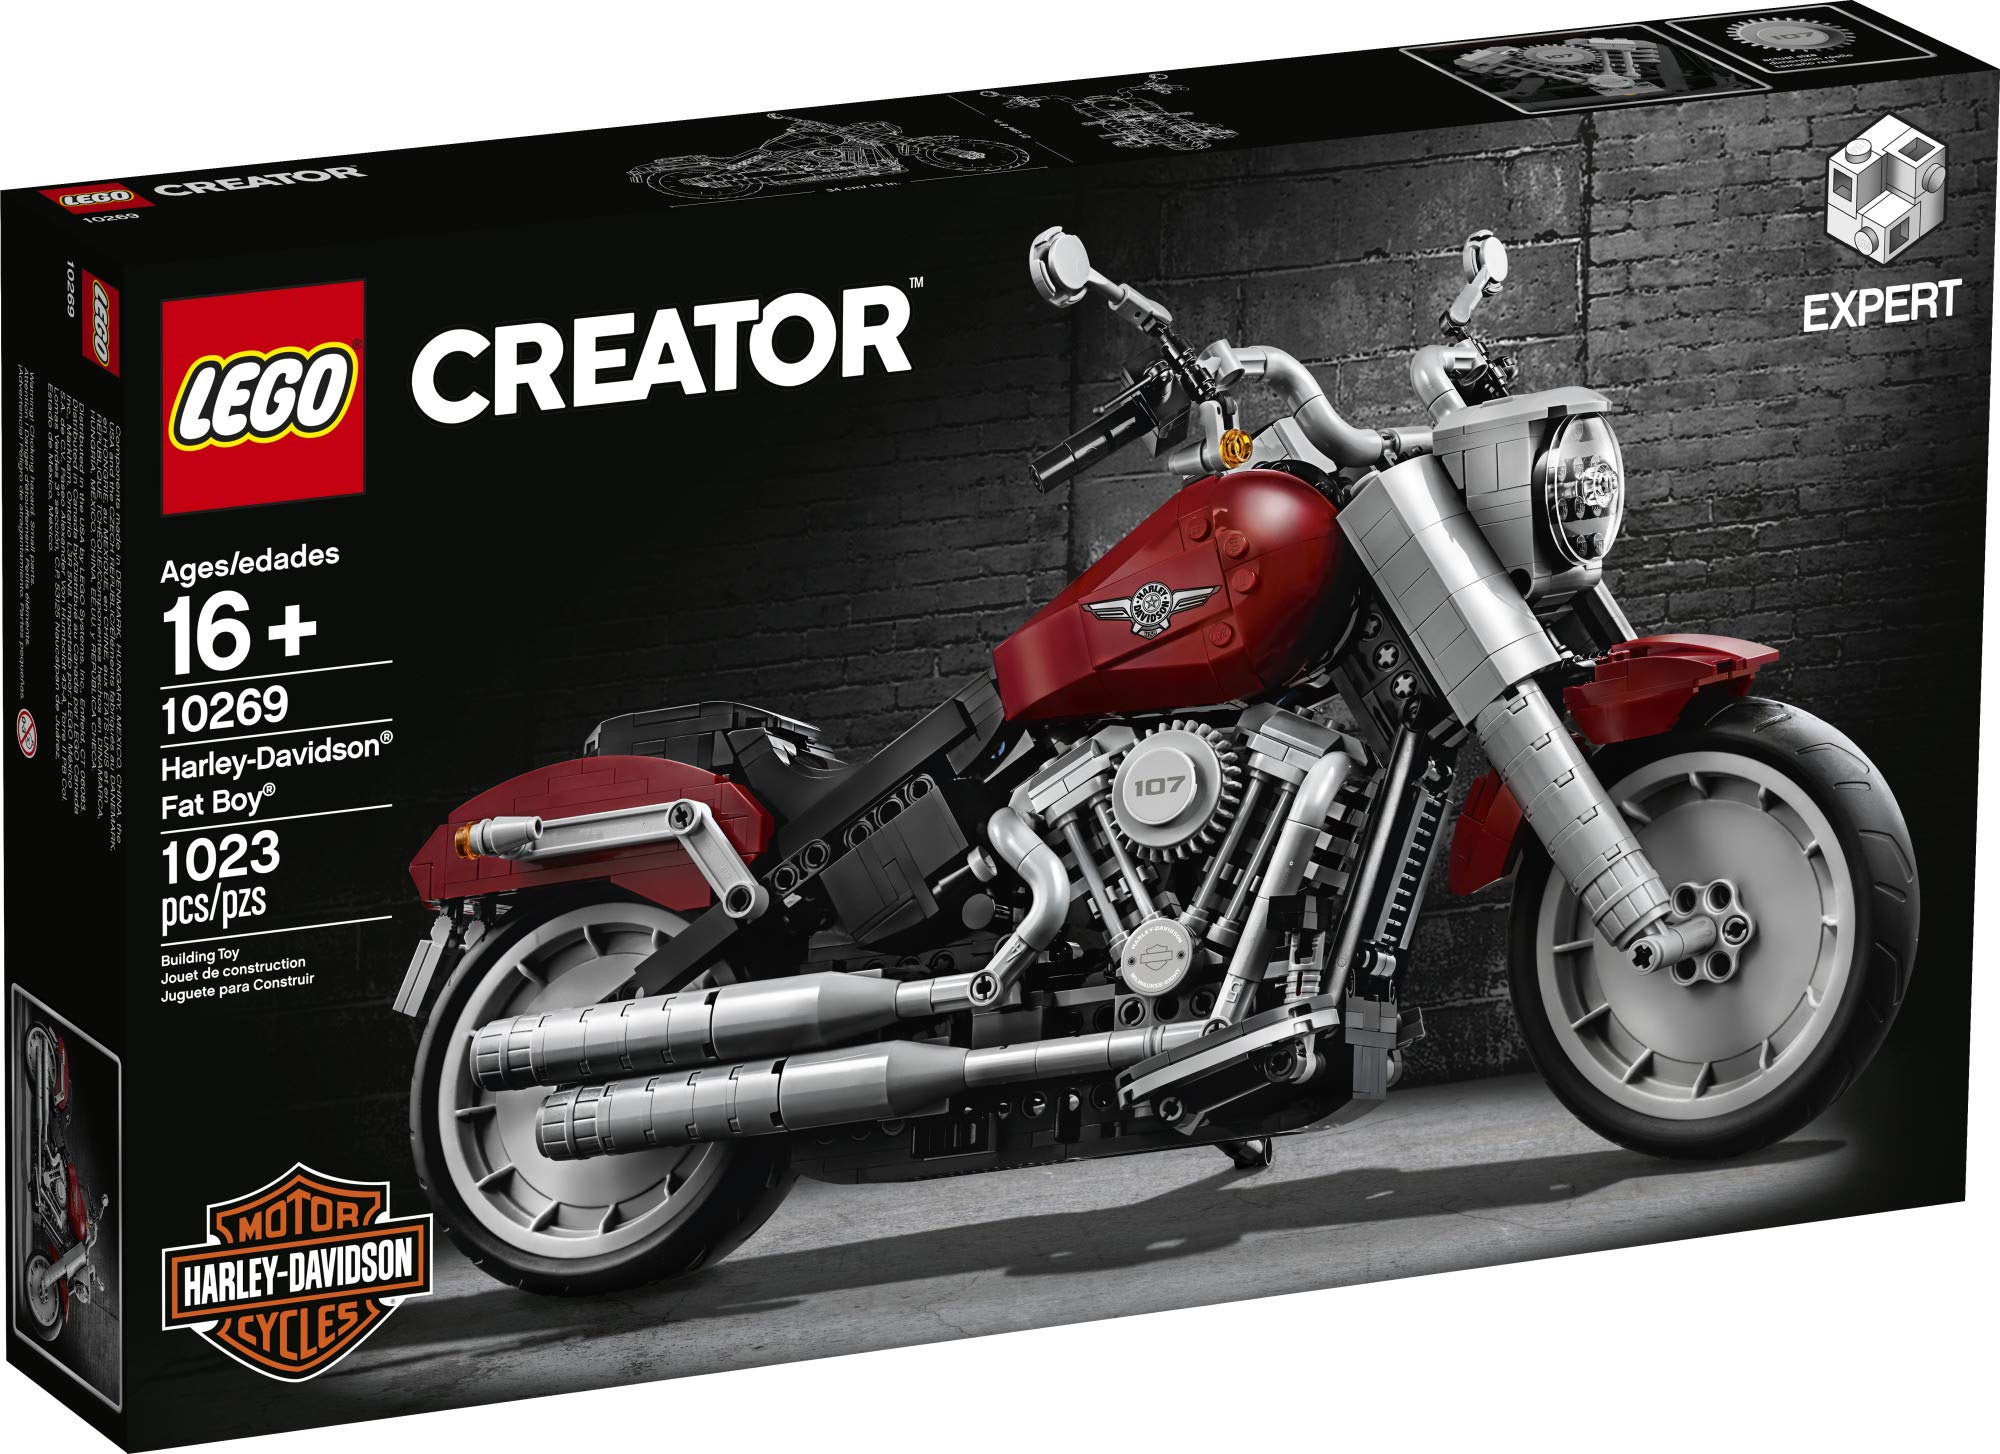 LEGO Creator Expert Harley-Davidson Fat Boy 10269 Building Kit (1,023 Pieces)